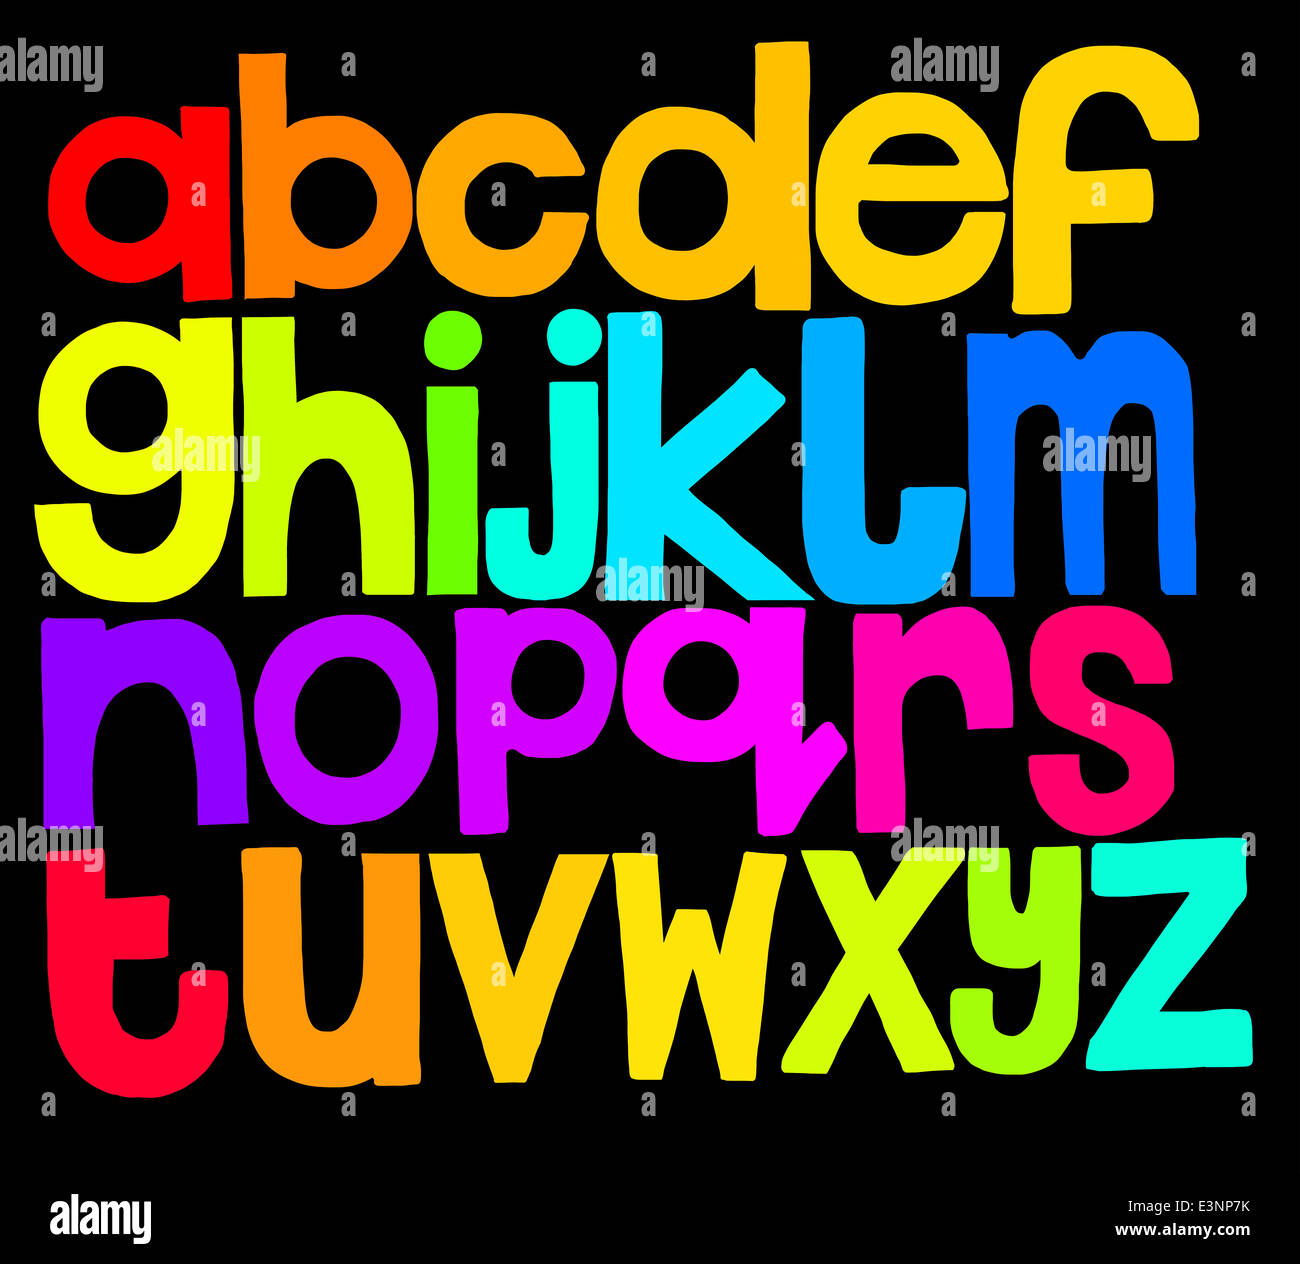 Illustration of alphabet Stock Photo